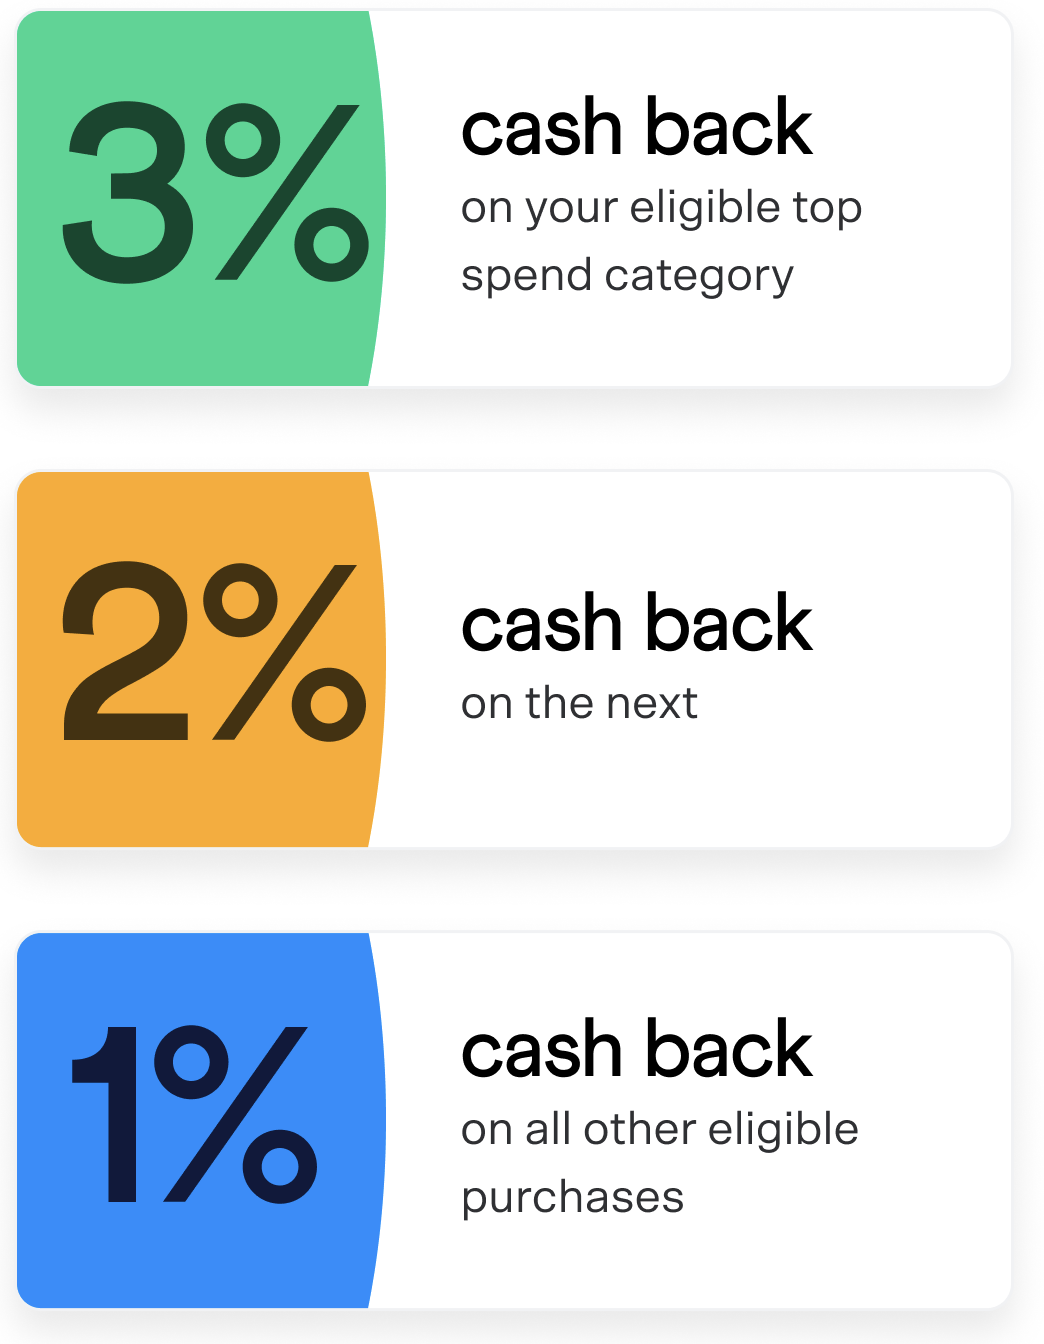  Crypto.com Cashback Credit Card Review 2021 - up to